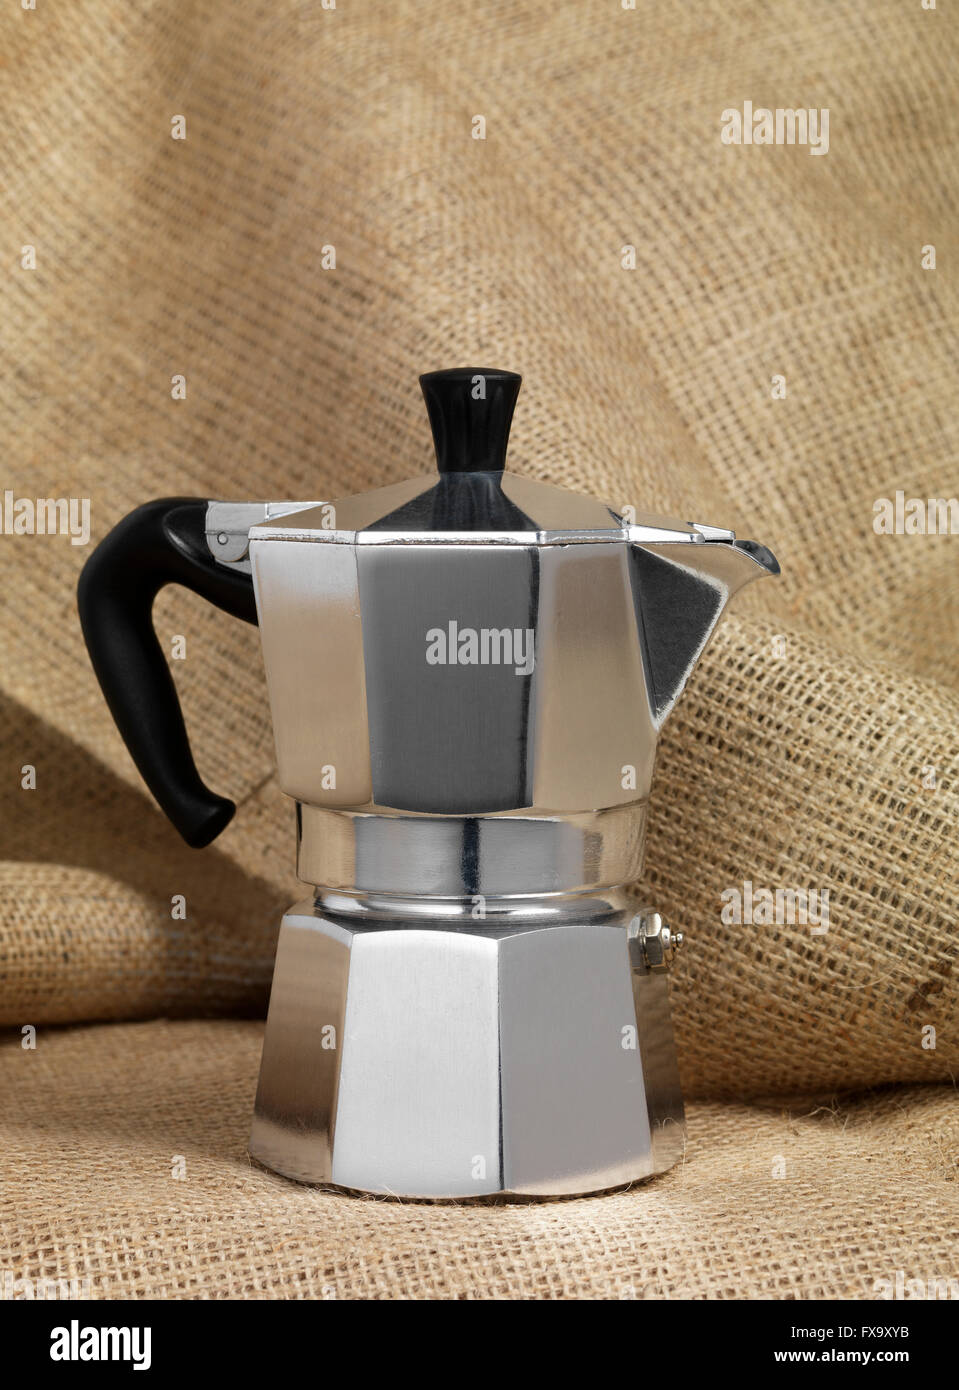 https://c8.alamy.com/comp/FX9XYB/italian-coffee-machine-FX9XYB.jpg